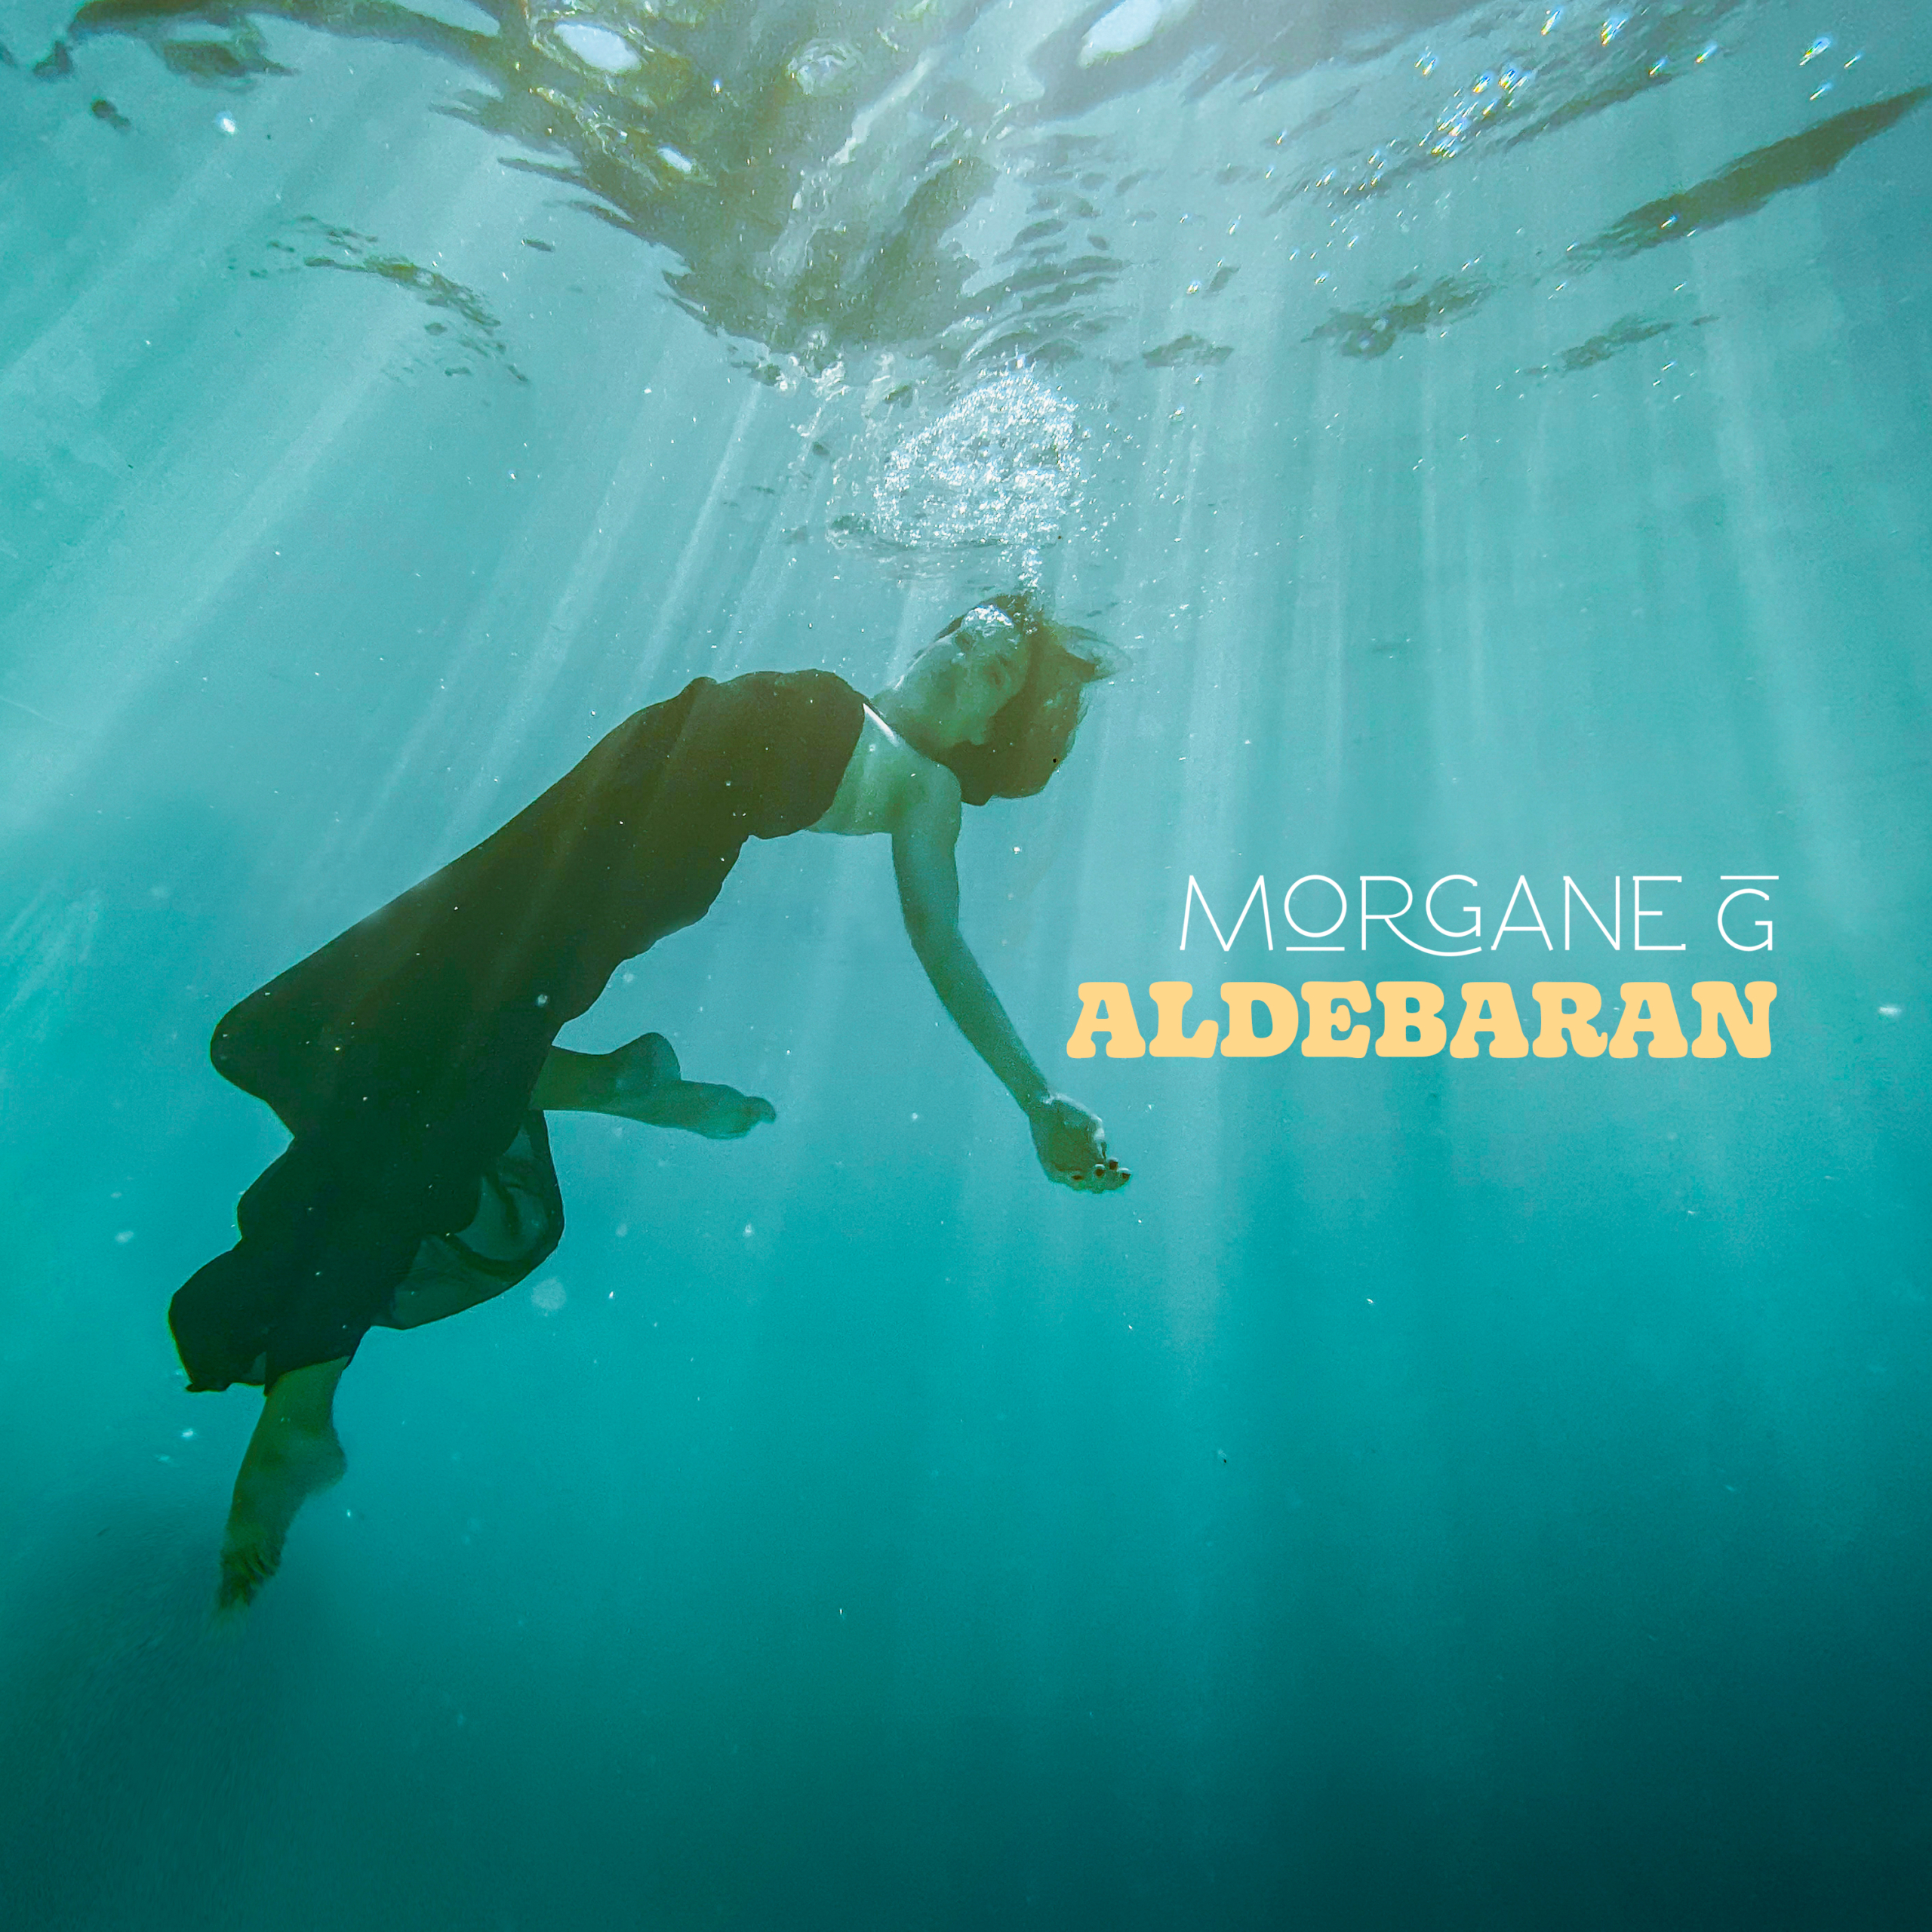 pochette du single Aldebaran de l'artiste Morgane G